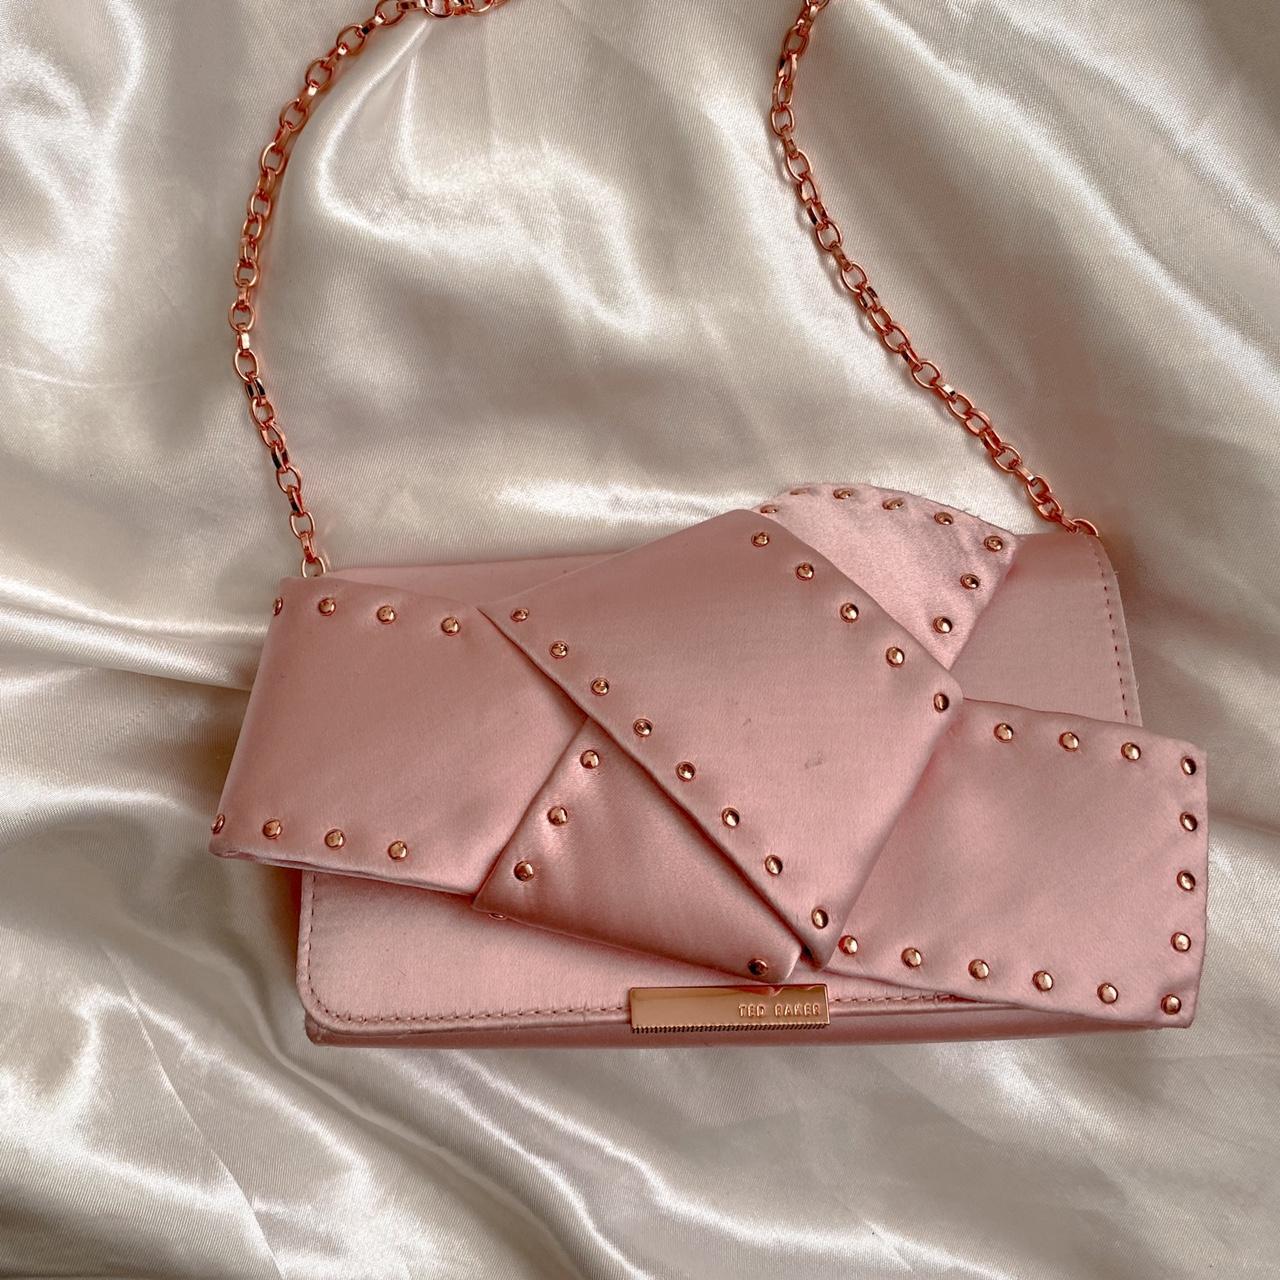 Ted Baker Women's Crossbody Bags - Pink